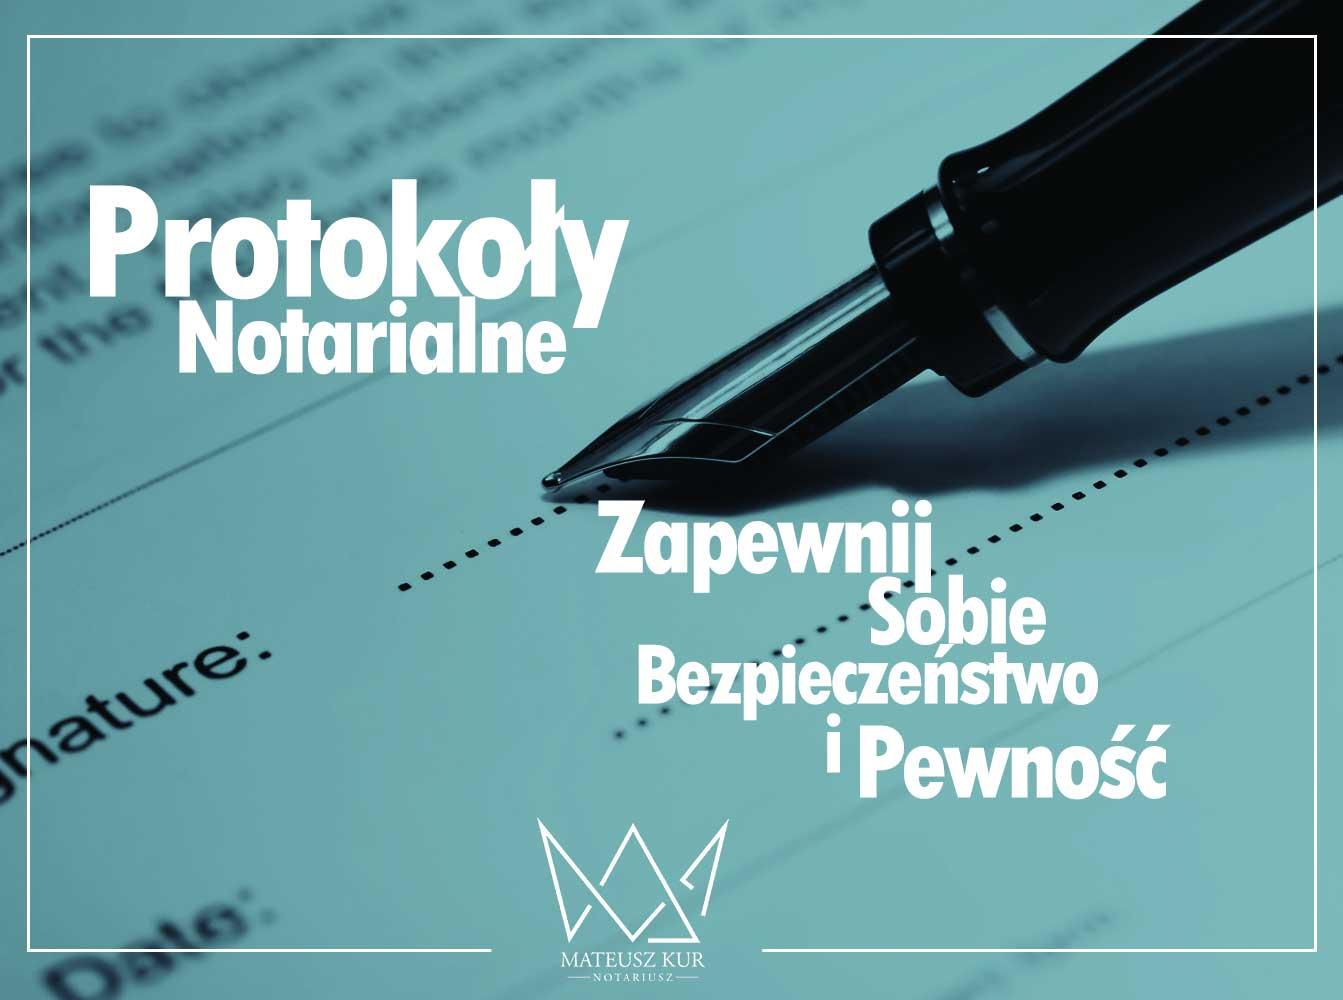 Protokoły notarialne notariusz Gdańsk cena